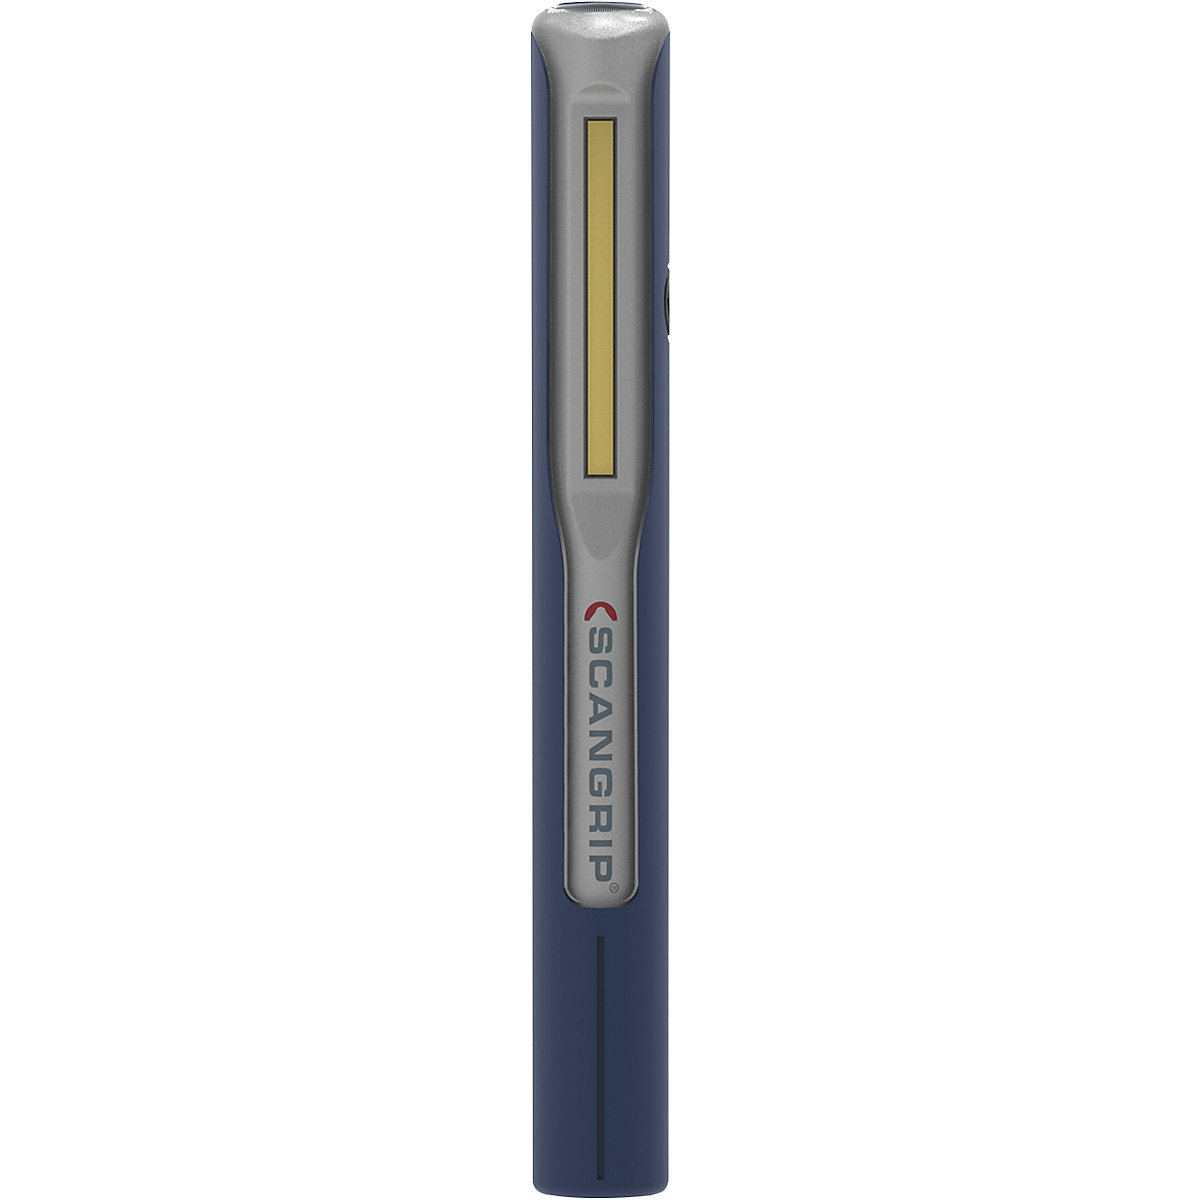 Akumulatorowa latarka długopisowa LED MAG PEN 3 – SCANGRIP (Zdjęcie produktu 2)-1